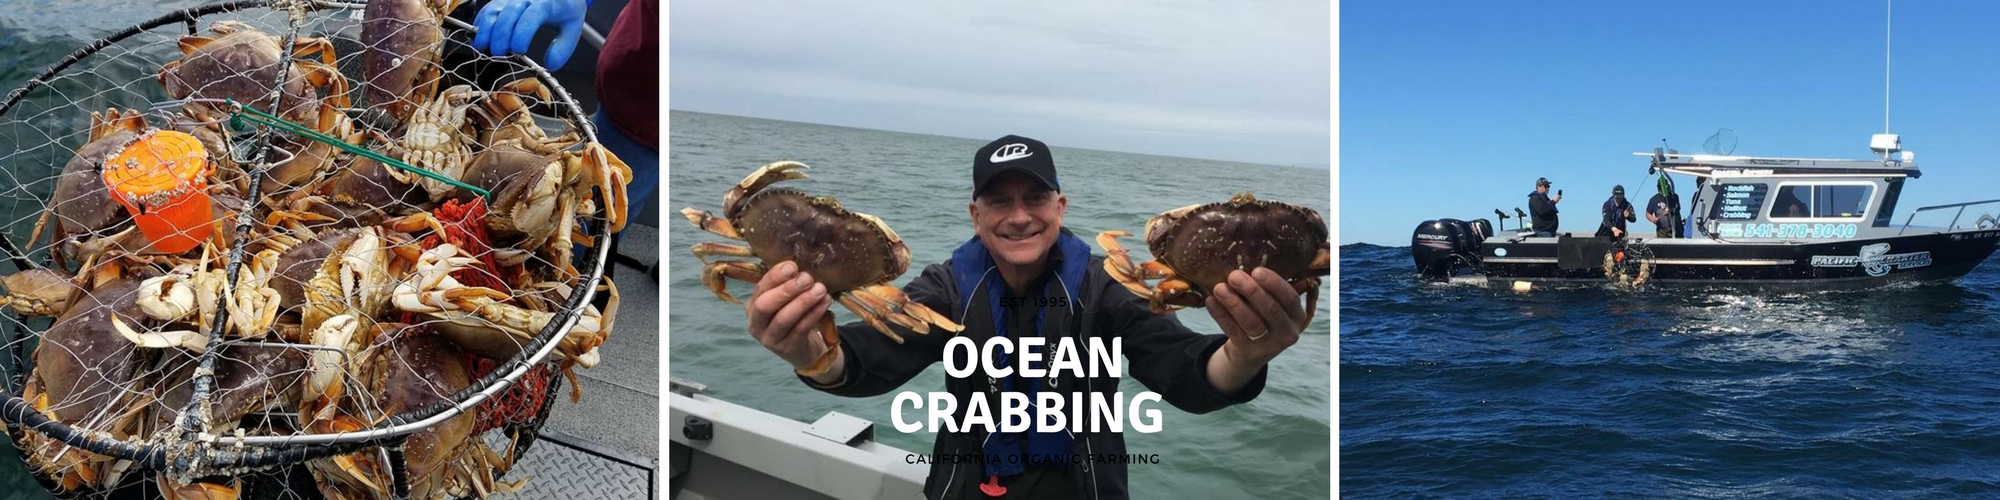 Pacific Ocean Crabbing